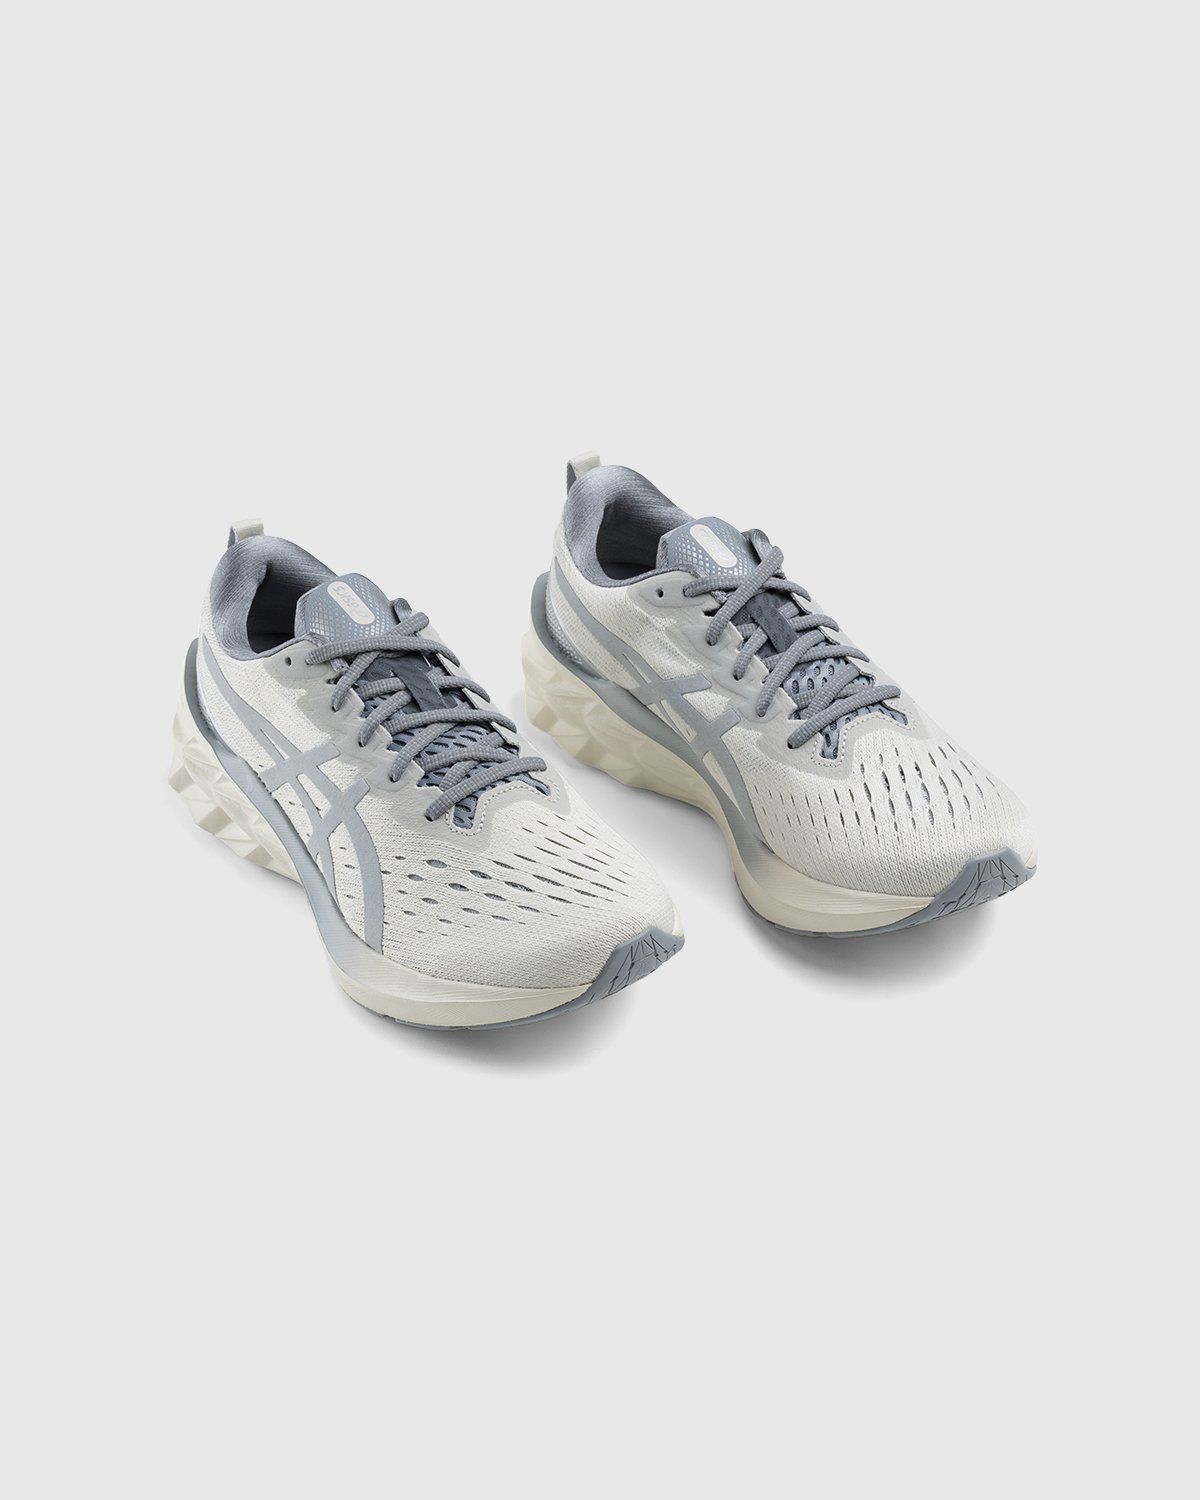 asics – Novablast 2 SPS Smoke Grey Piedmont Grey - Low Top Sneakers - Beige - Image 3